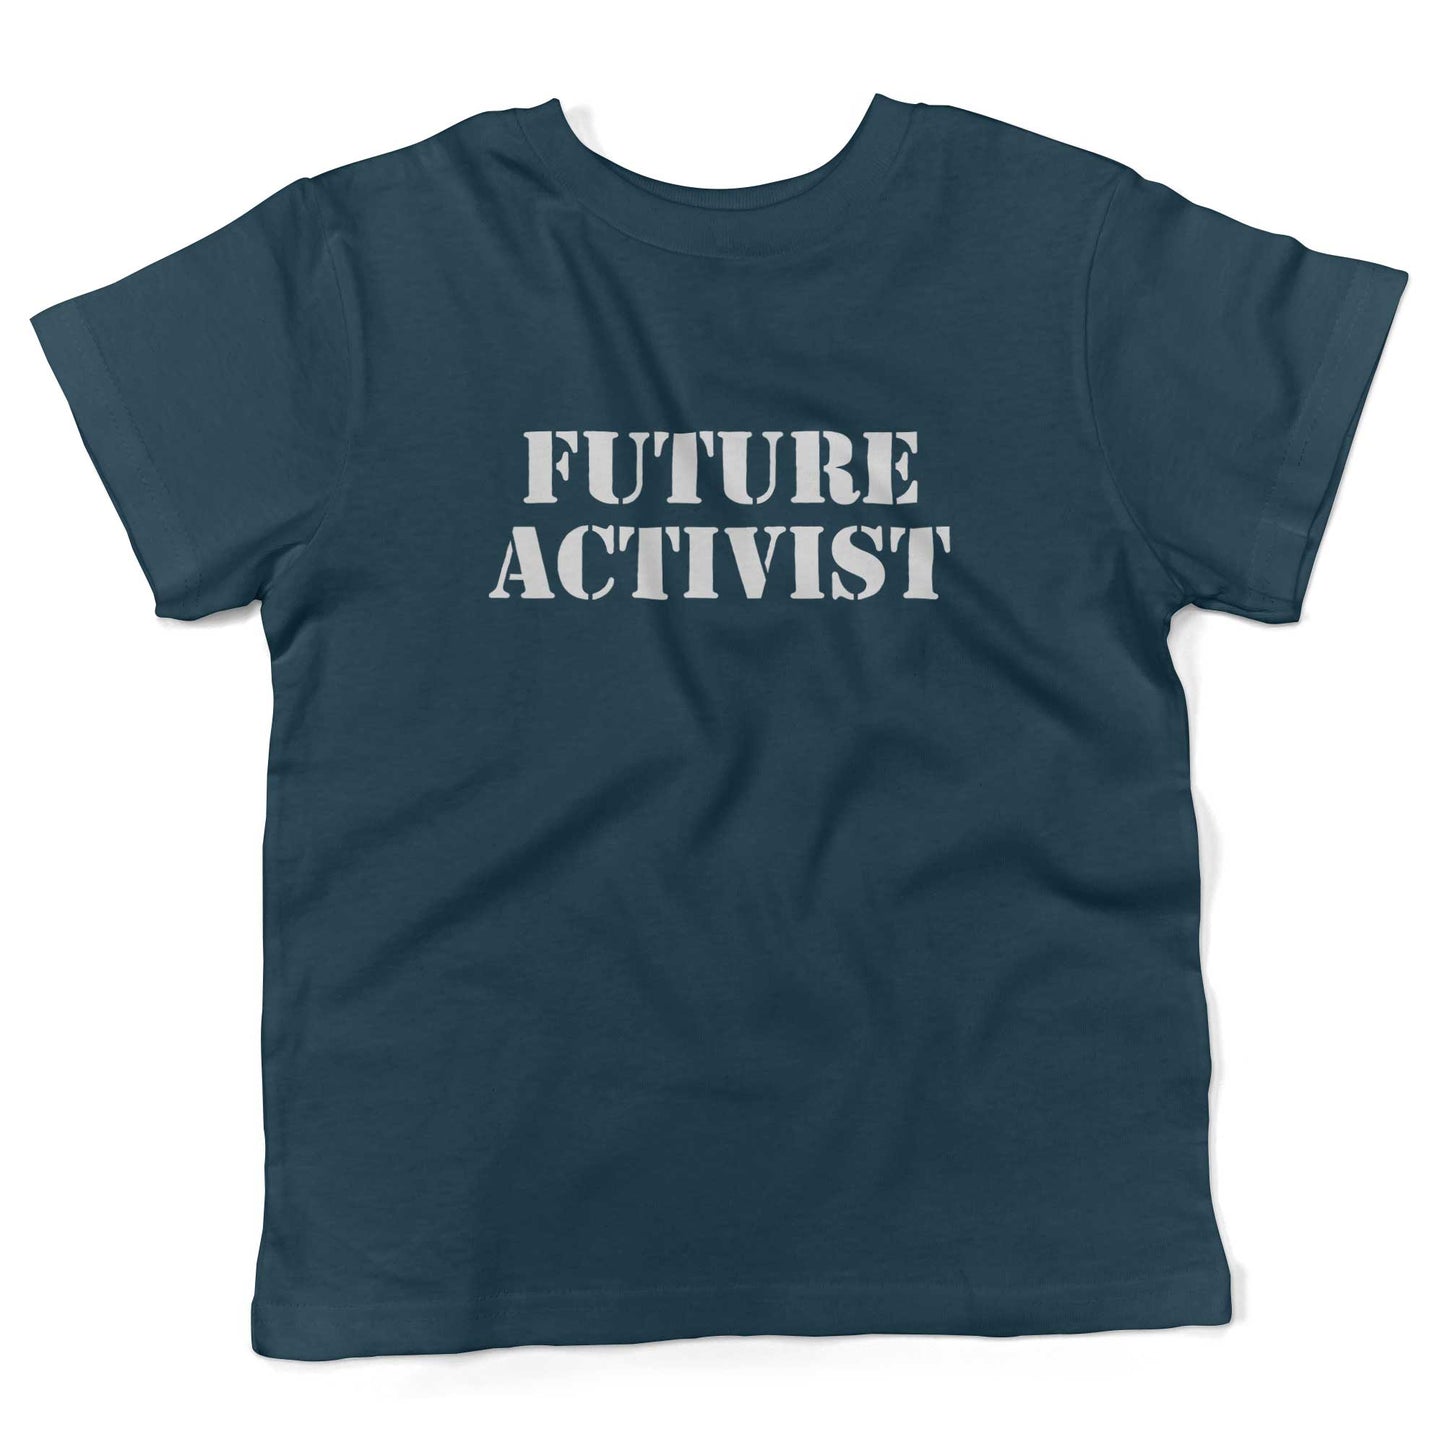 Future Activist Toddler Shirt-Organic Pacific Blue-2T